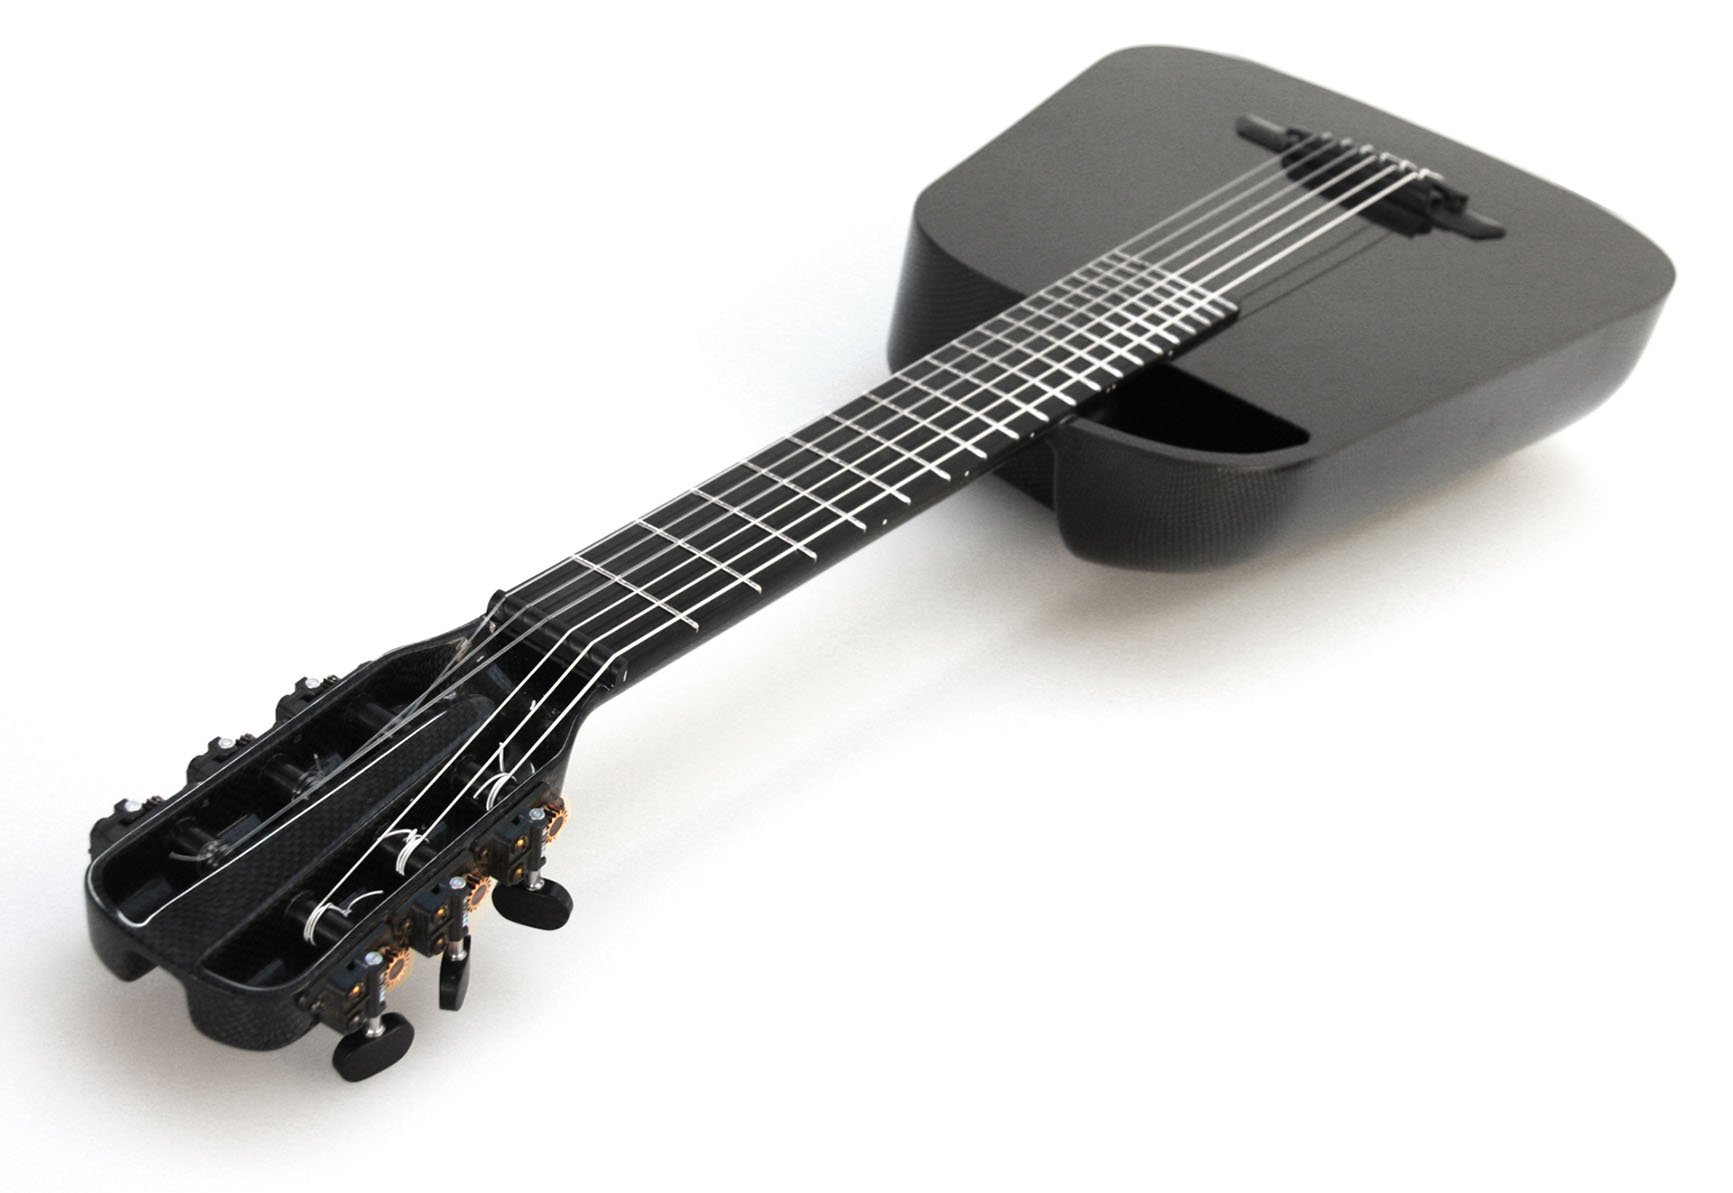 Гитары нейлон. Гитара Blackbird Carbon. Blackbird Carbon Fiber Guitar. Black Bird Rider гитара. Гитара Bellucci углепластик.